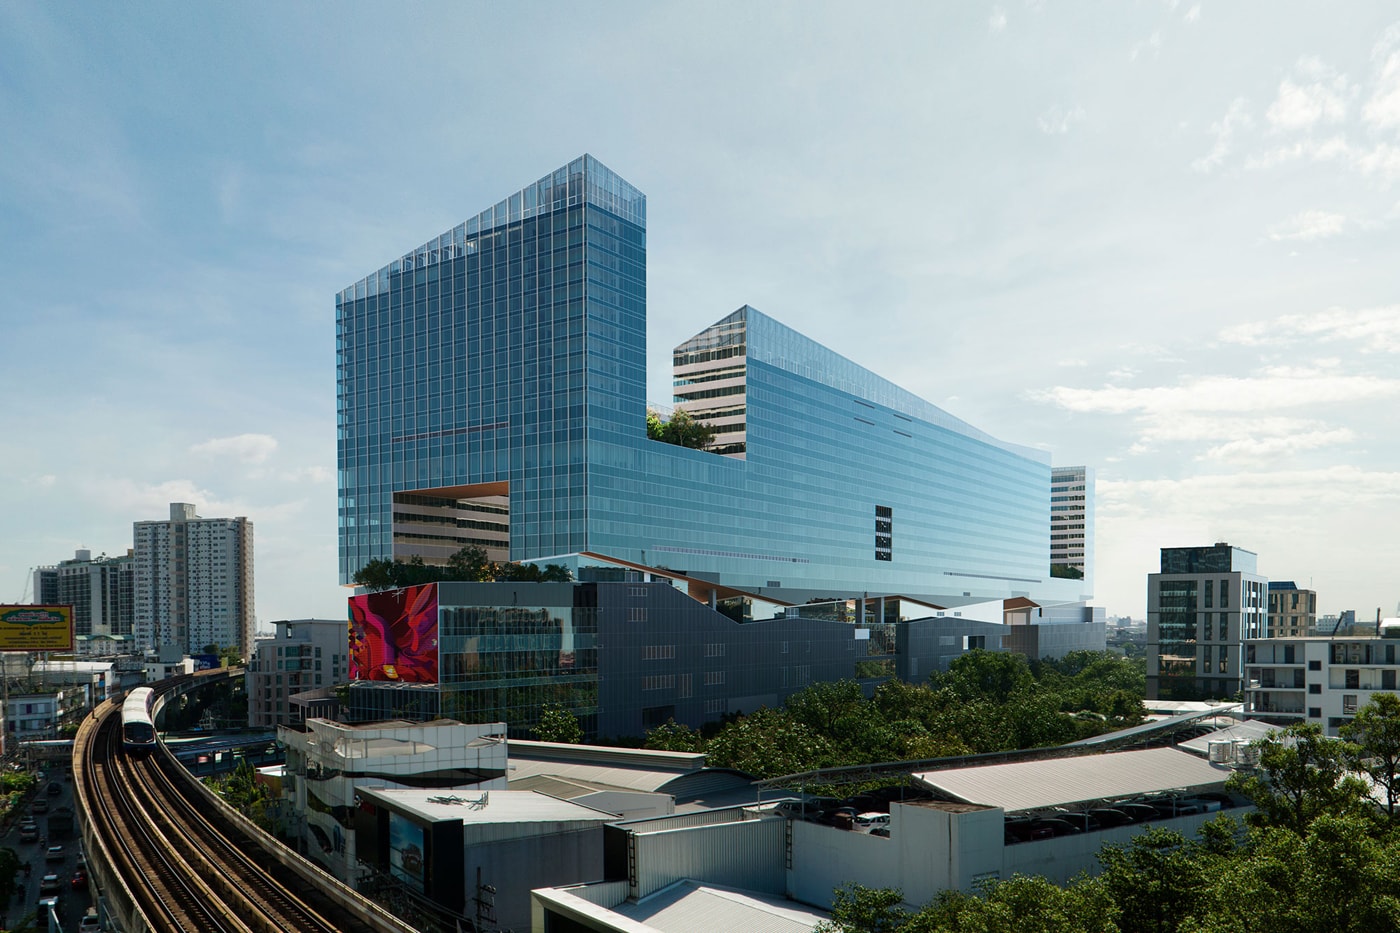 Snohetta Innovation hub urban garden reimagining bangkok Cloud 11 south sukhumvit Bangkok cybertech district greenery 